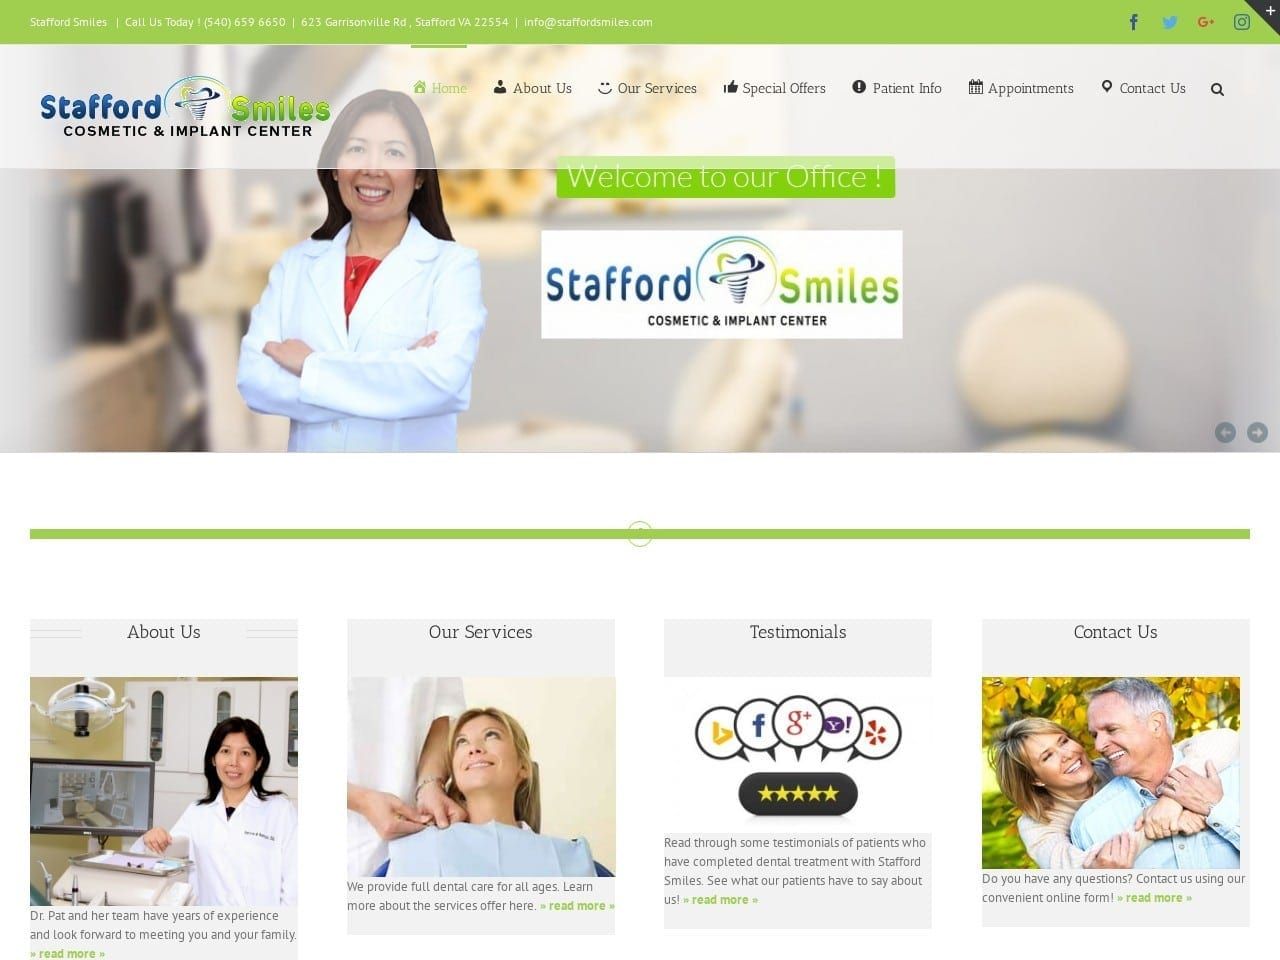 Stafford Smiles General Cosmetic & Implant Dentist Website Screenshot from staffordsmiles.com